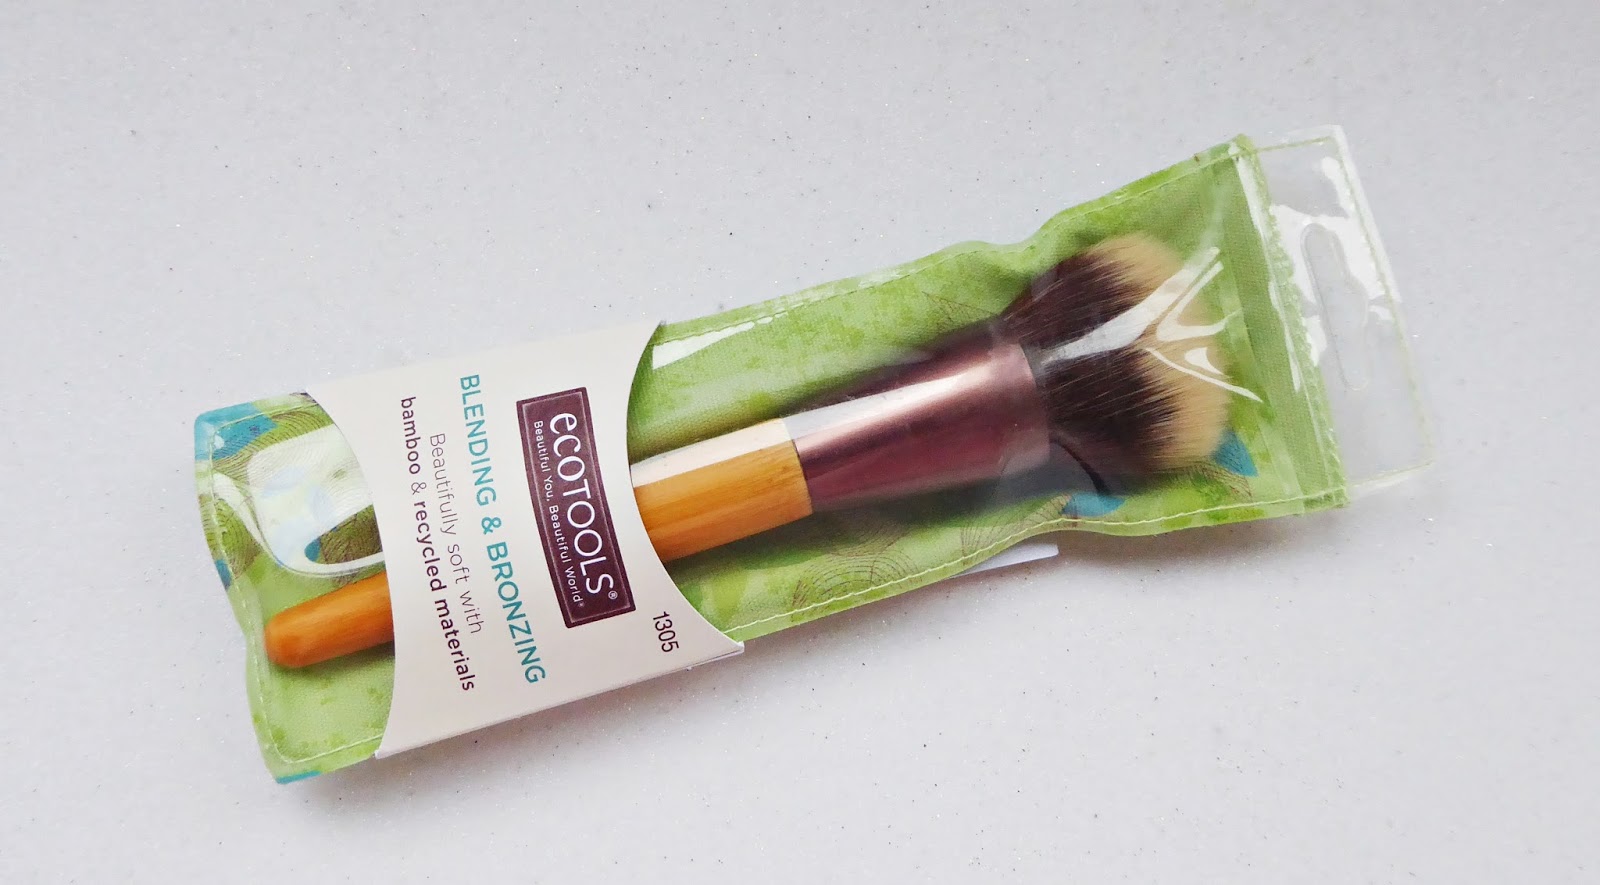 iHerb: Blending & Bronzing brush de Eco Tools, una brocha para polvos bronceadores